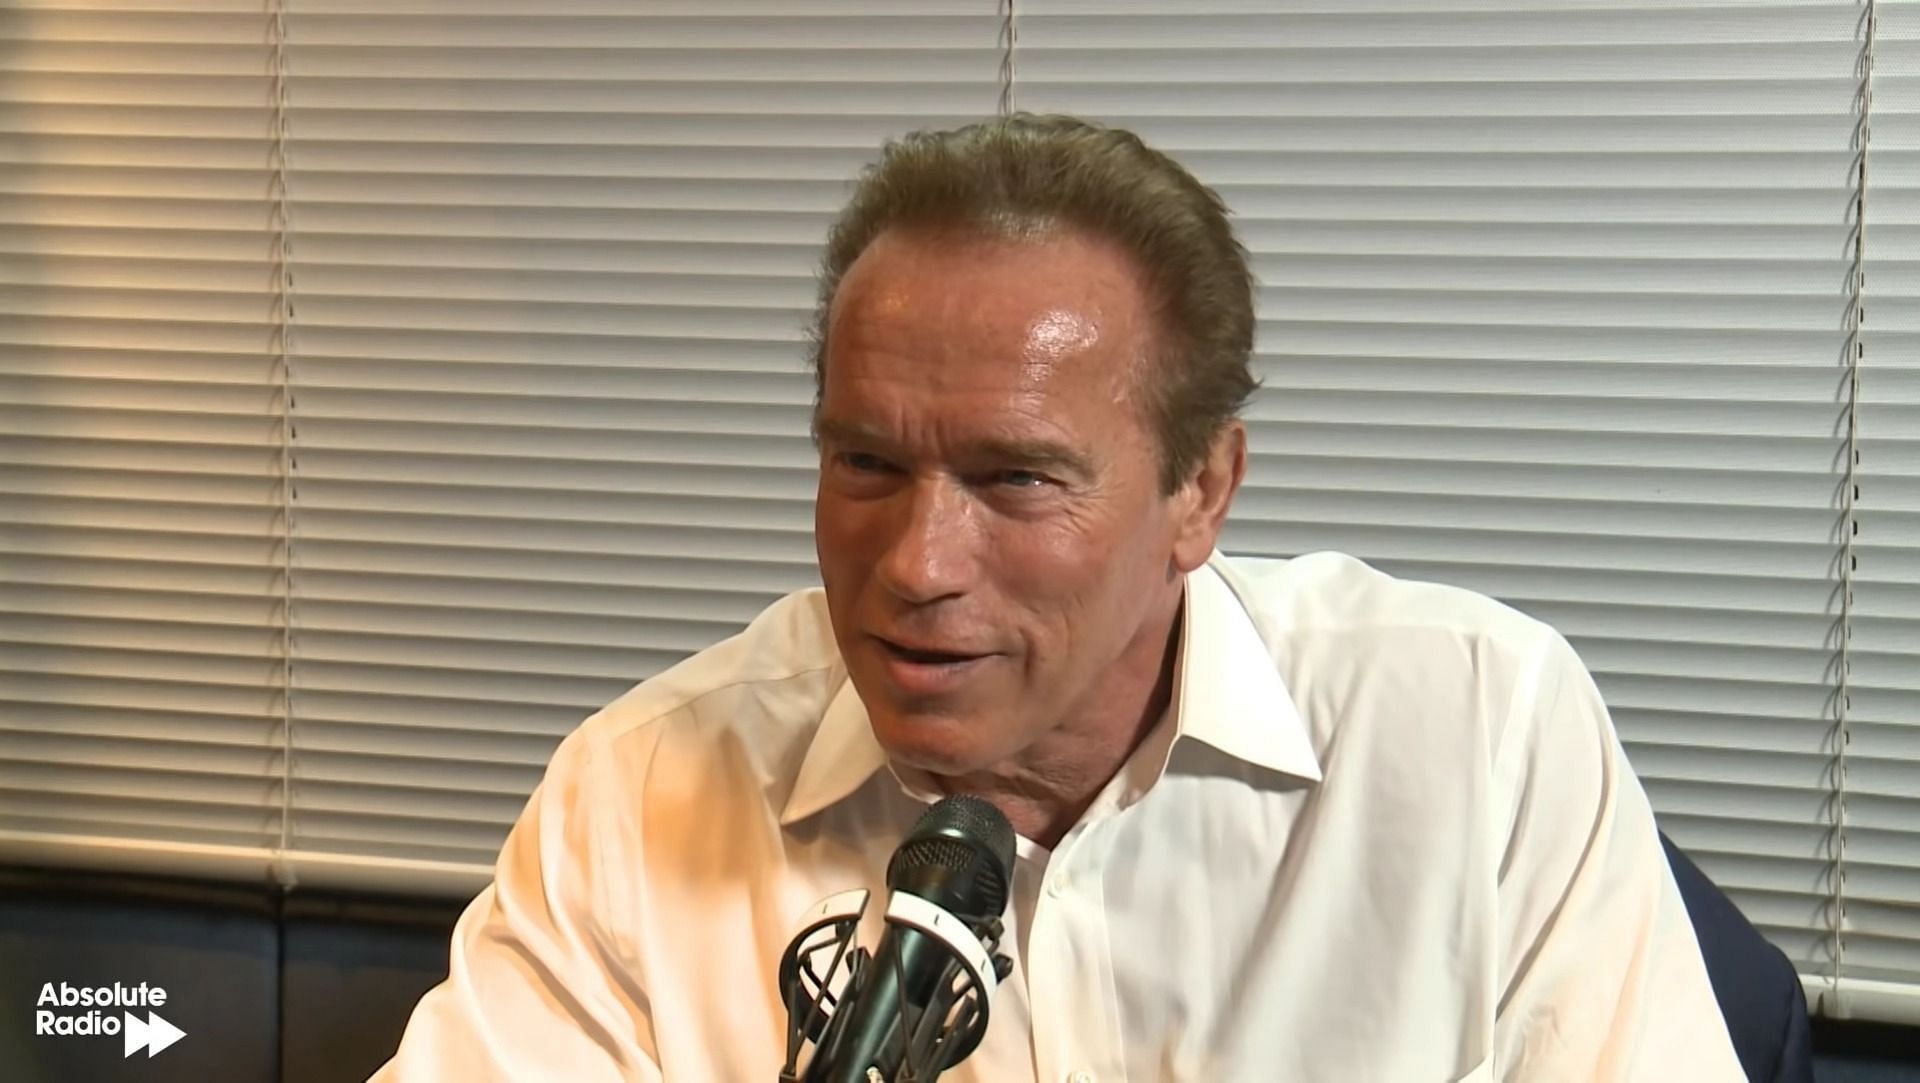 Arnold Schwarzenegger (Image via Absolute Radio/YouTube)